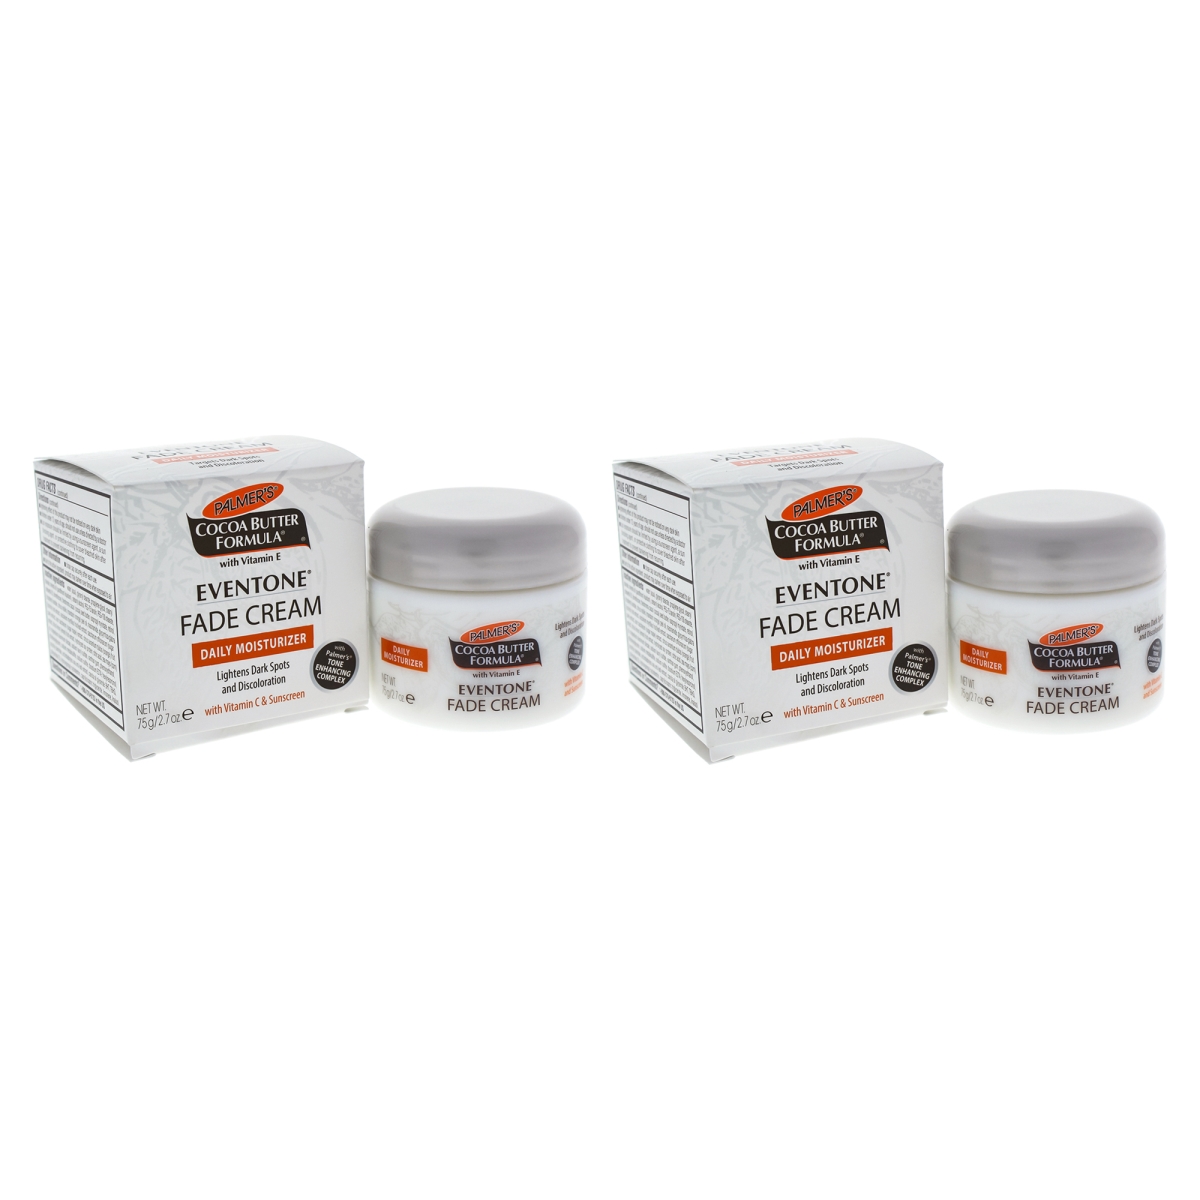 K0000372 Cocoa Butter Eventone Fade Cream For Unisex - 2.7 Oz - Pack Of 2